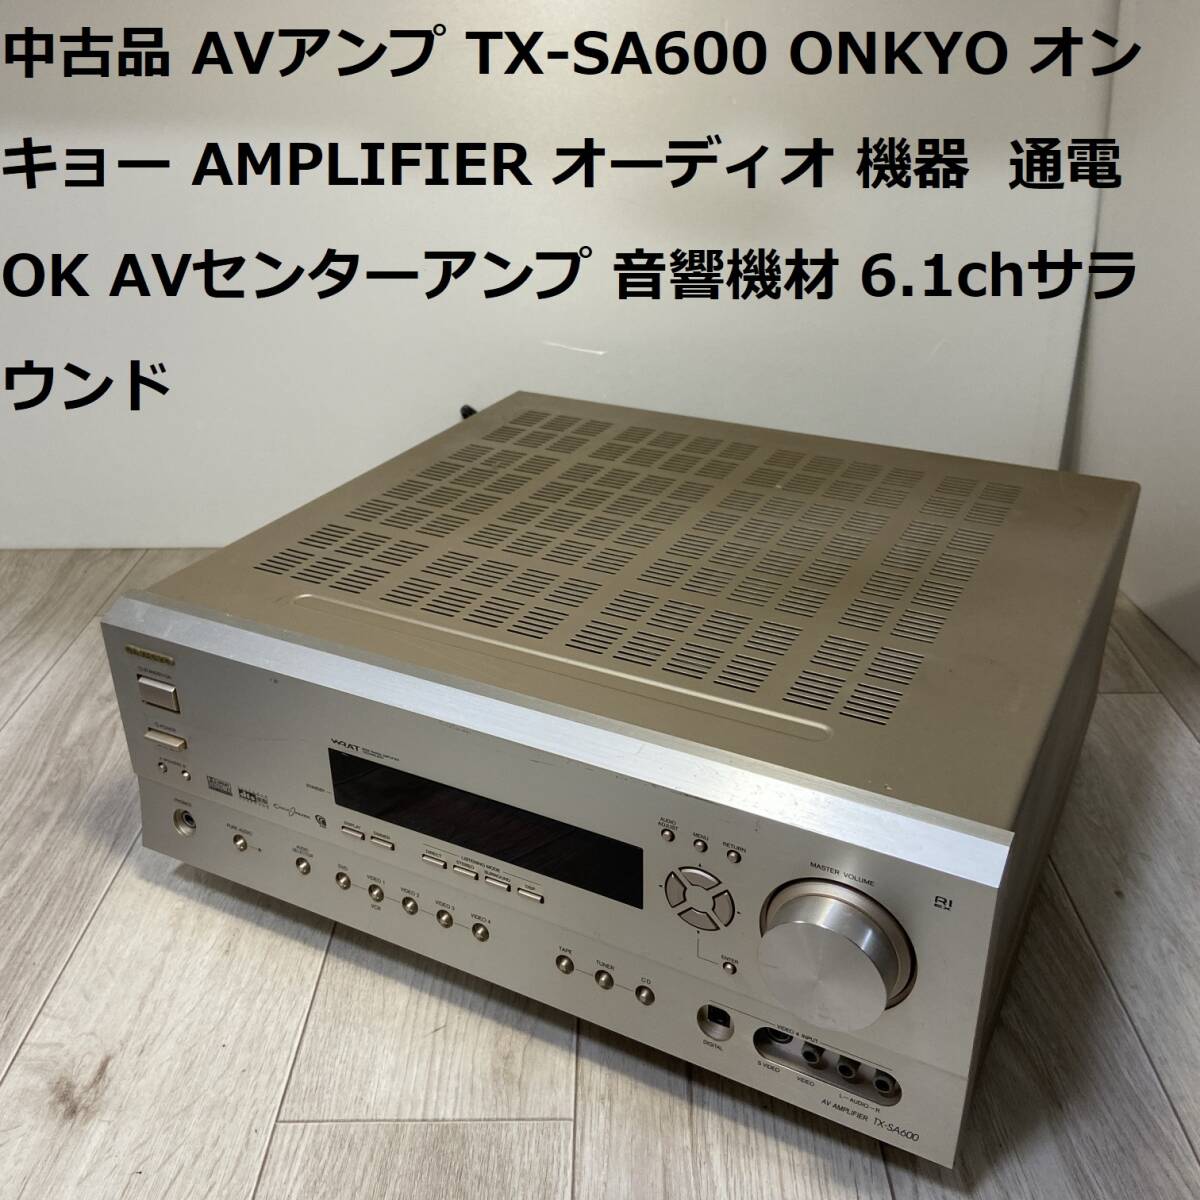 Yahoo!オークション - 中古品 AVアンプ TX-SA600 ONKYO オンキョ...